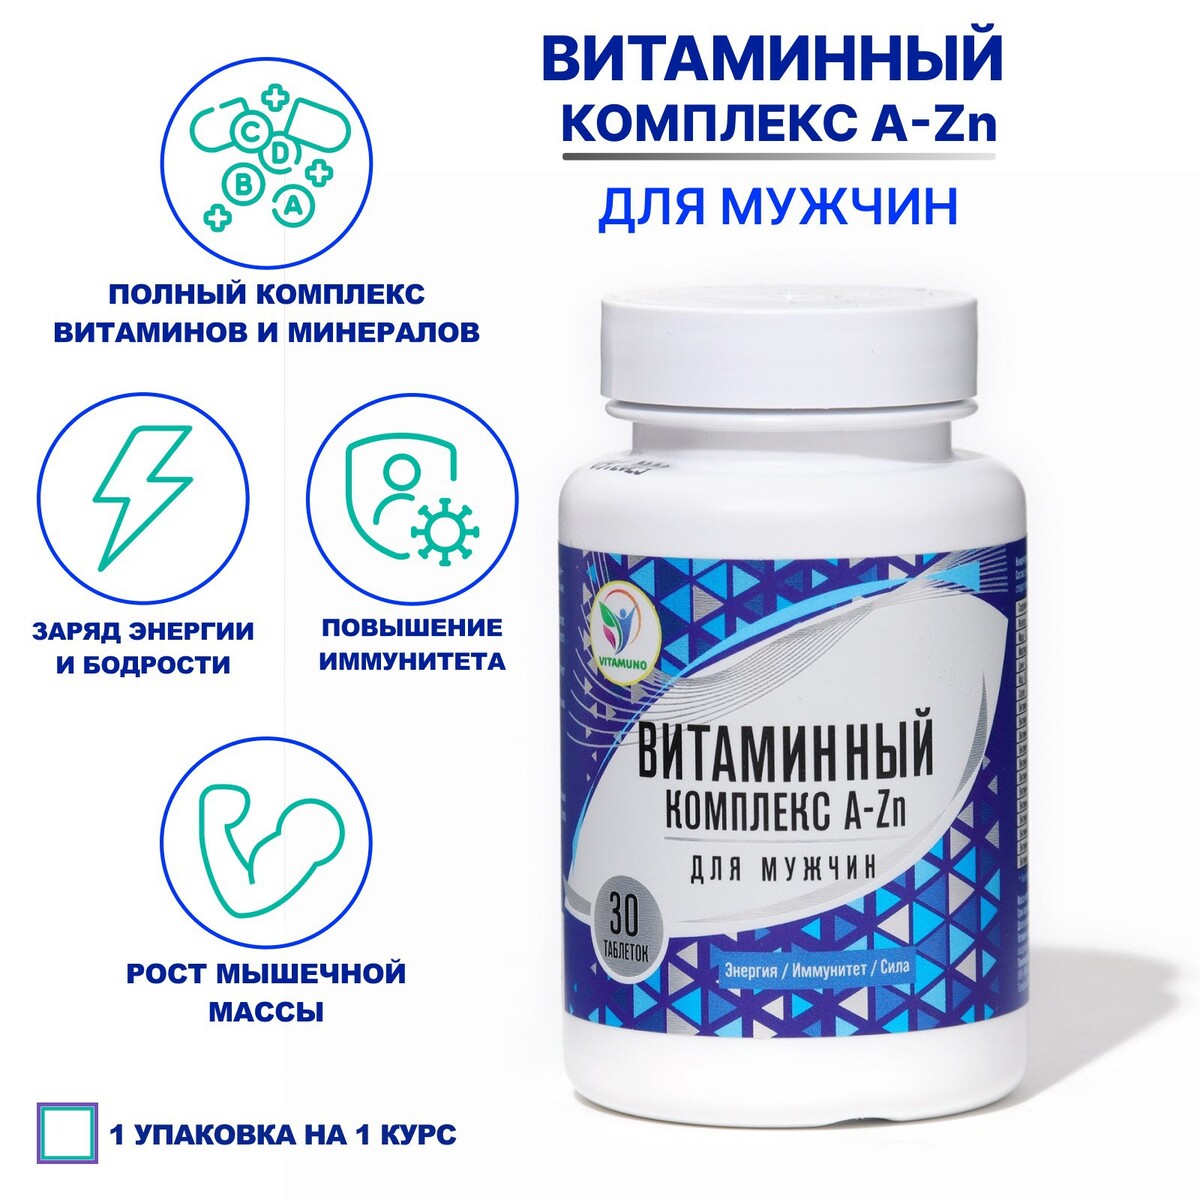 Витаминный комплекс a-zn для мужчин vitamuno, 30 таблеток fénomène esthet духи группы для мужчин 75мл